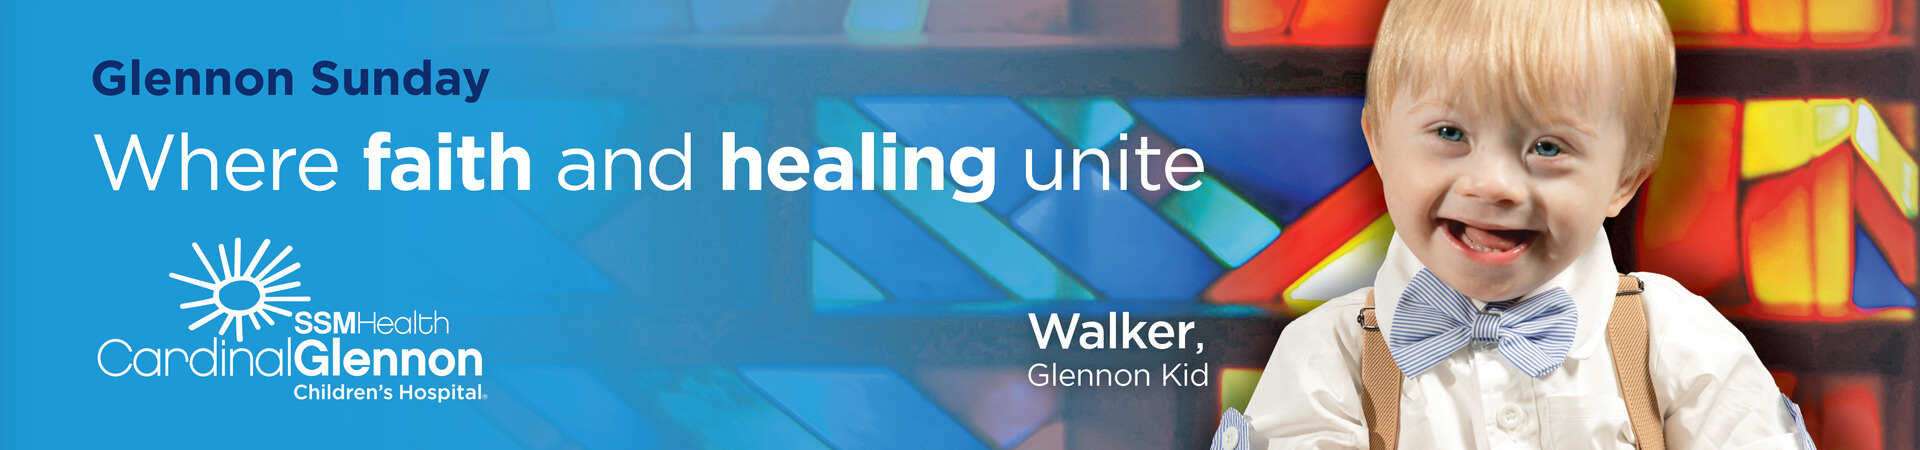 Glennon Sunday - Where Faith and Healing Unite, Cardinal Glennon patient Lavender